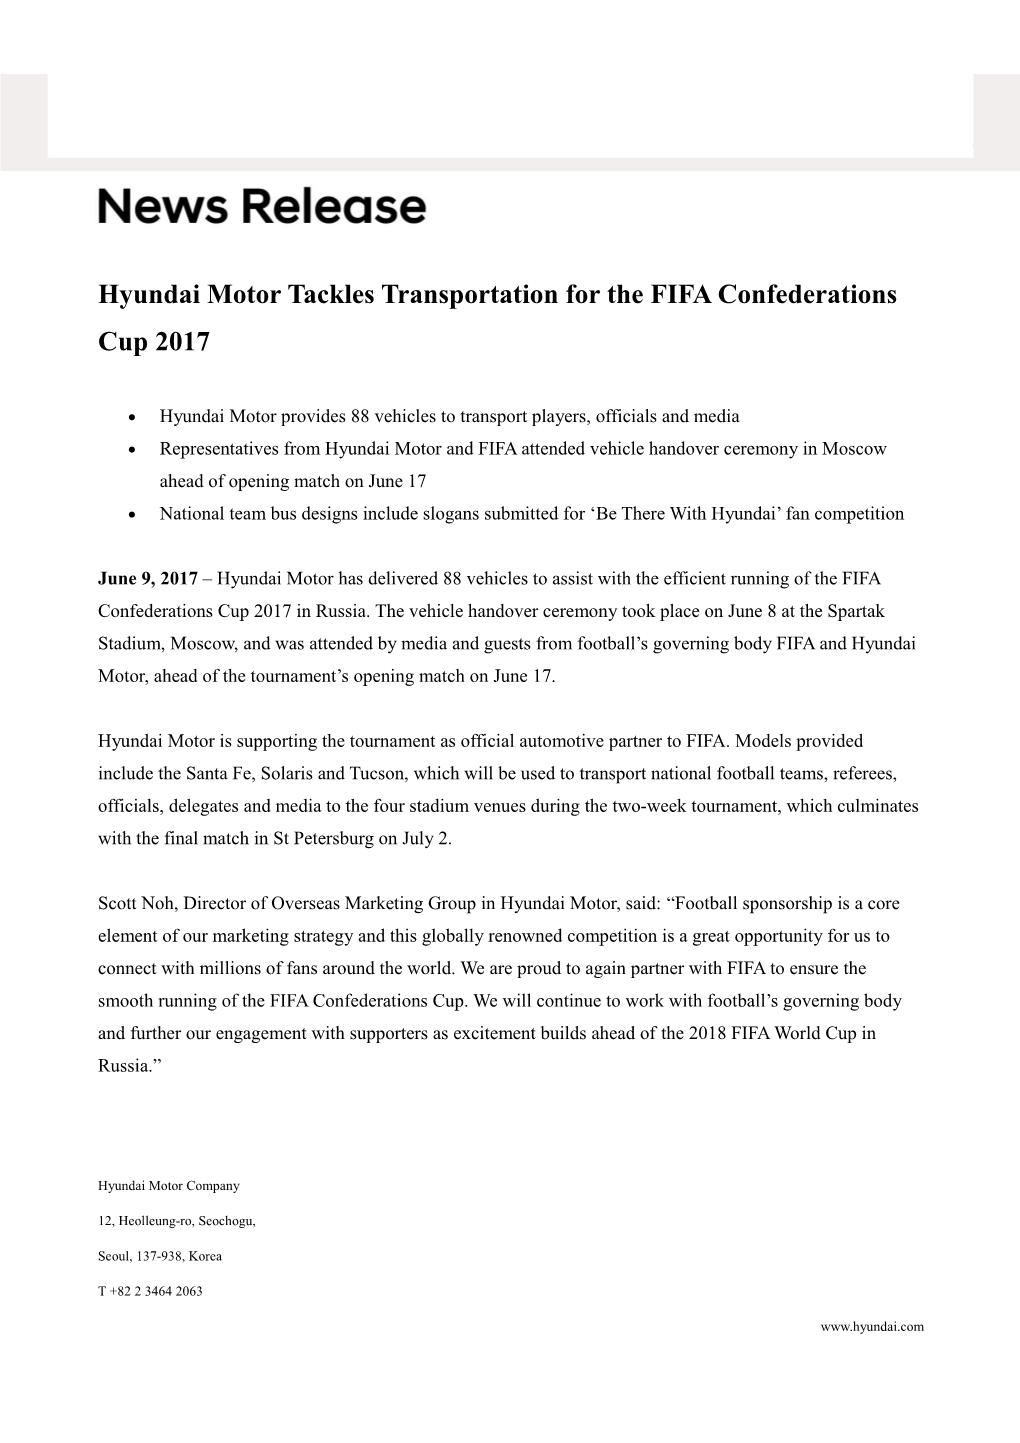 Hyundai Motor Tackles Transportation for the FIFA Confederations Cup 2017